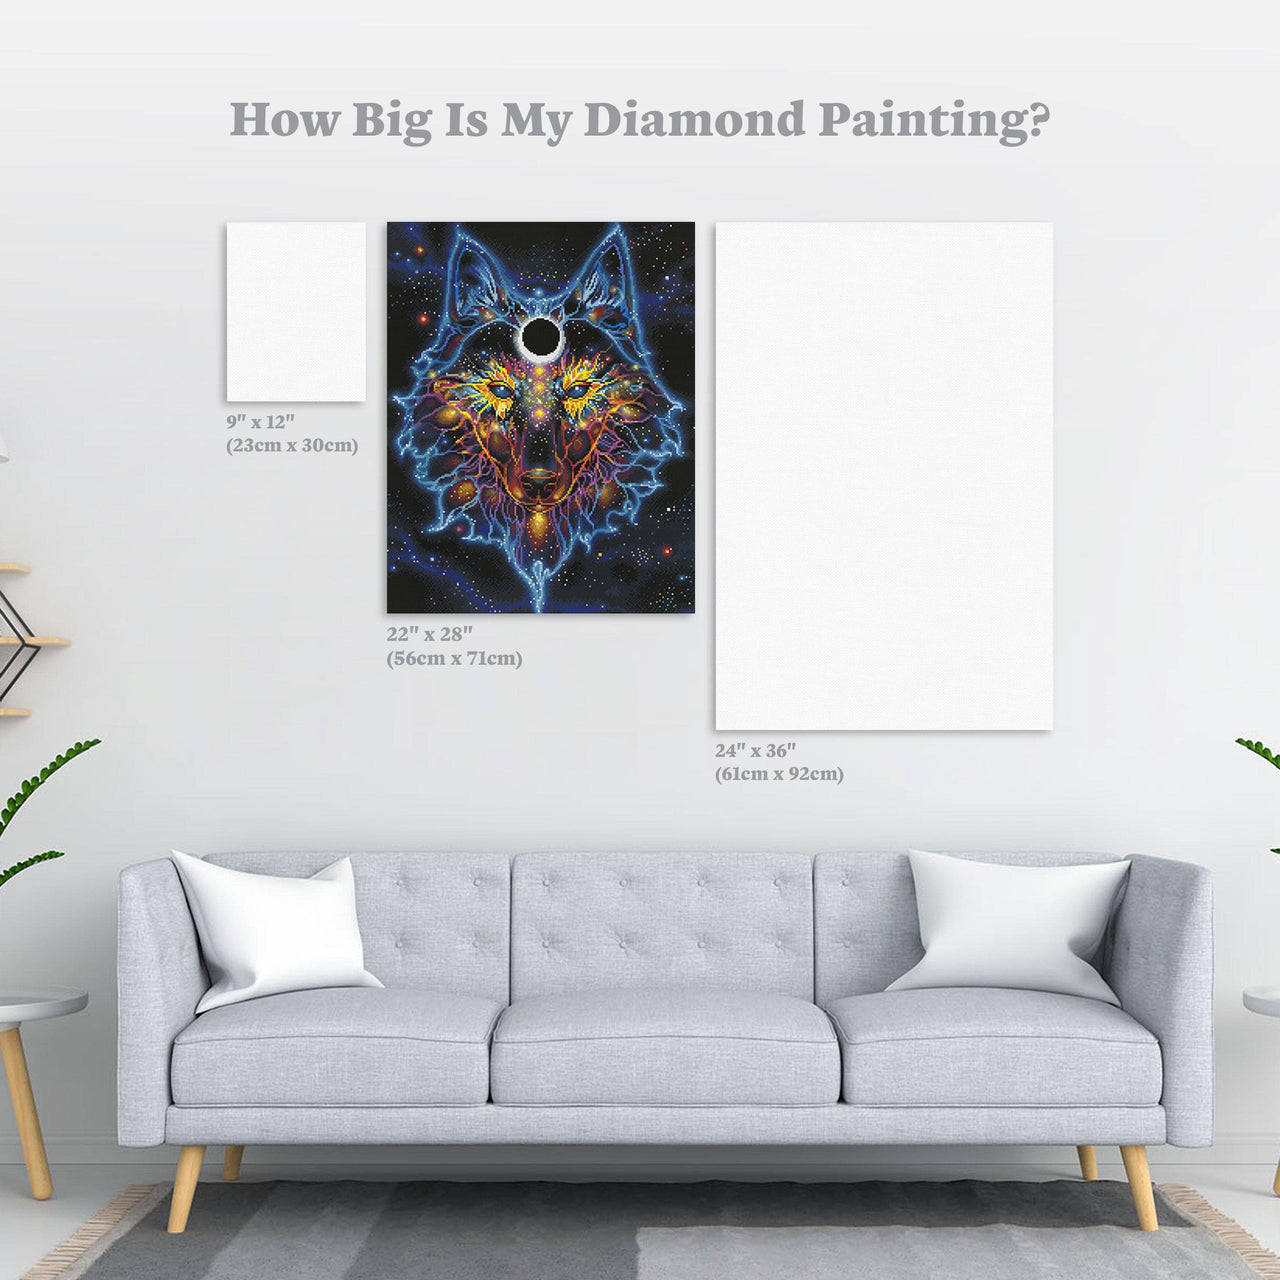 Diamond Painting Divine Instinct 22" x 28″ (56cm x 71cm) / Round With 44 Colors Including 3 ABs / 49,396